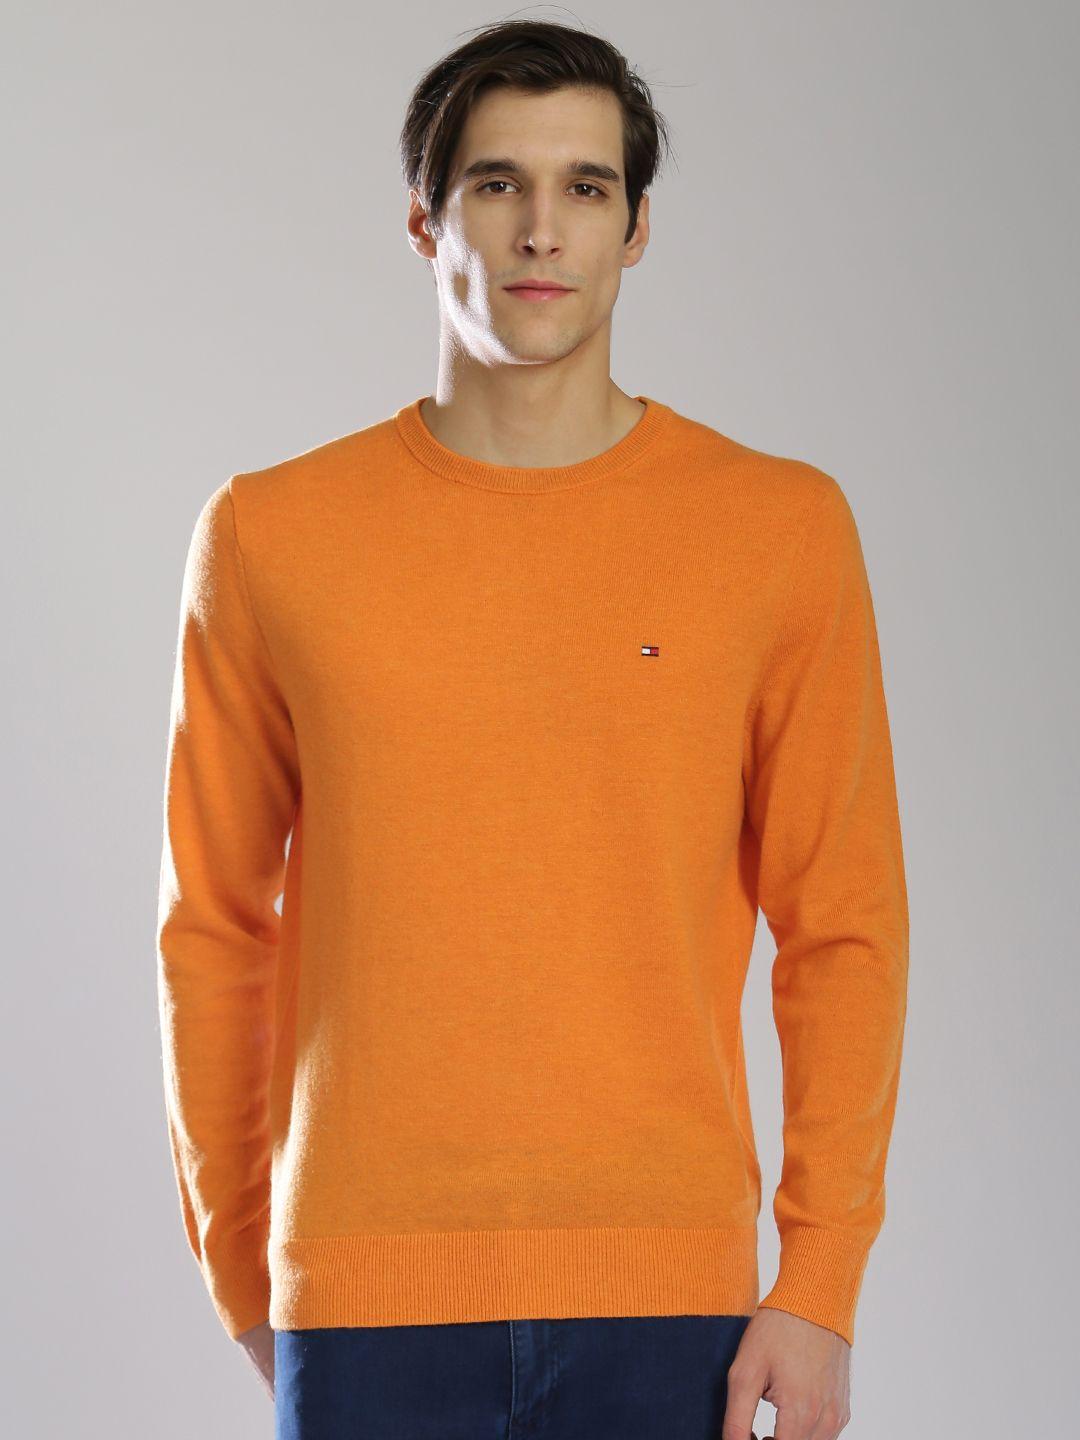 tommy hilfiger men orange sweater